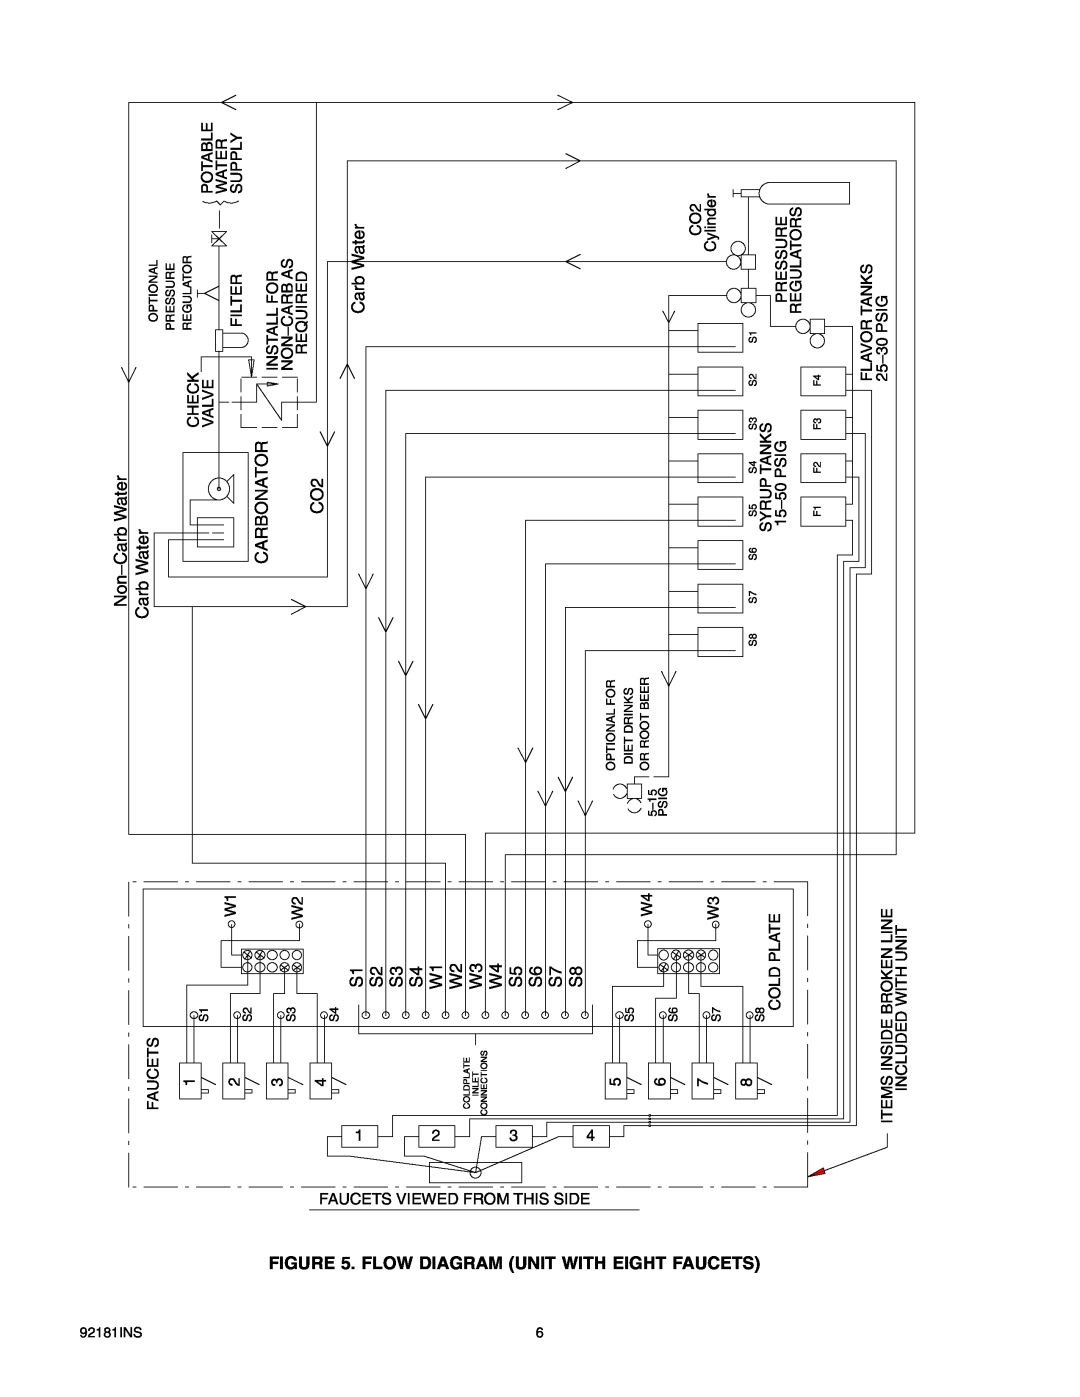 Cornelius Enduro-200/250 installation manual Flow Diagram Unit With, Eight, Faucets 